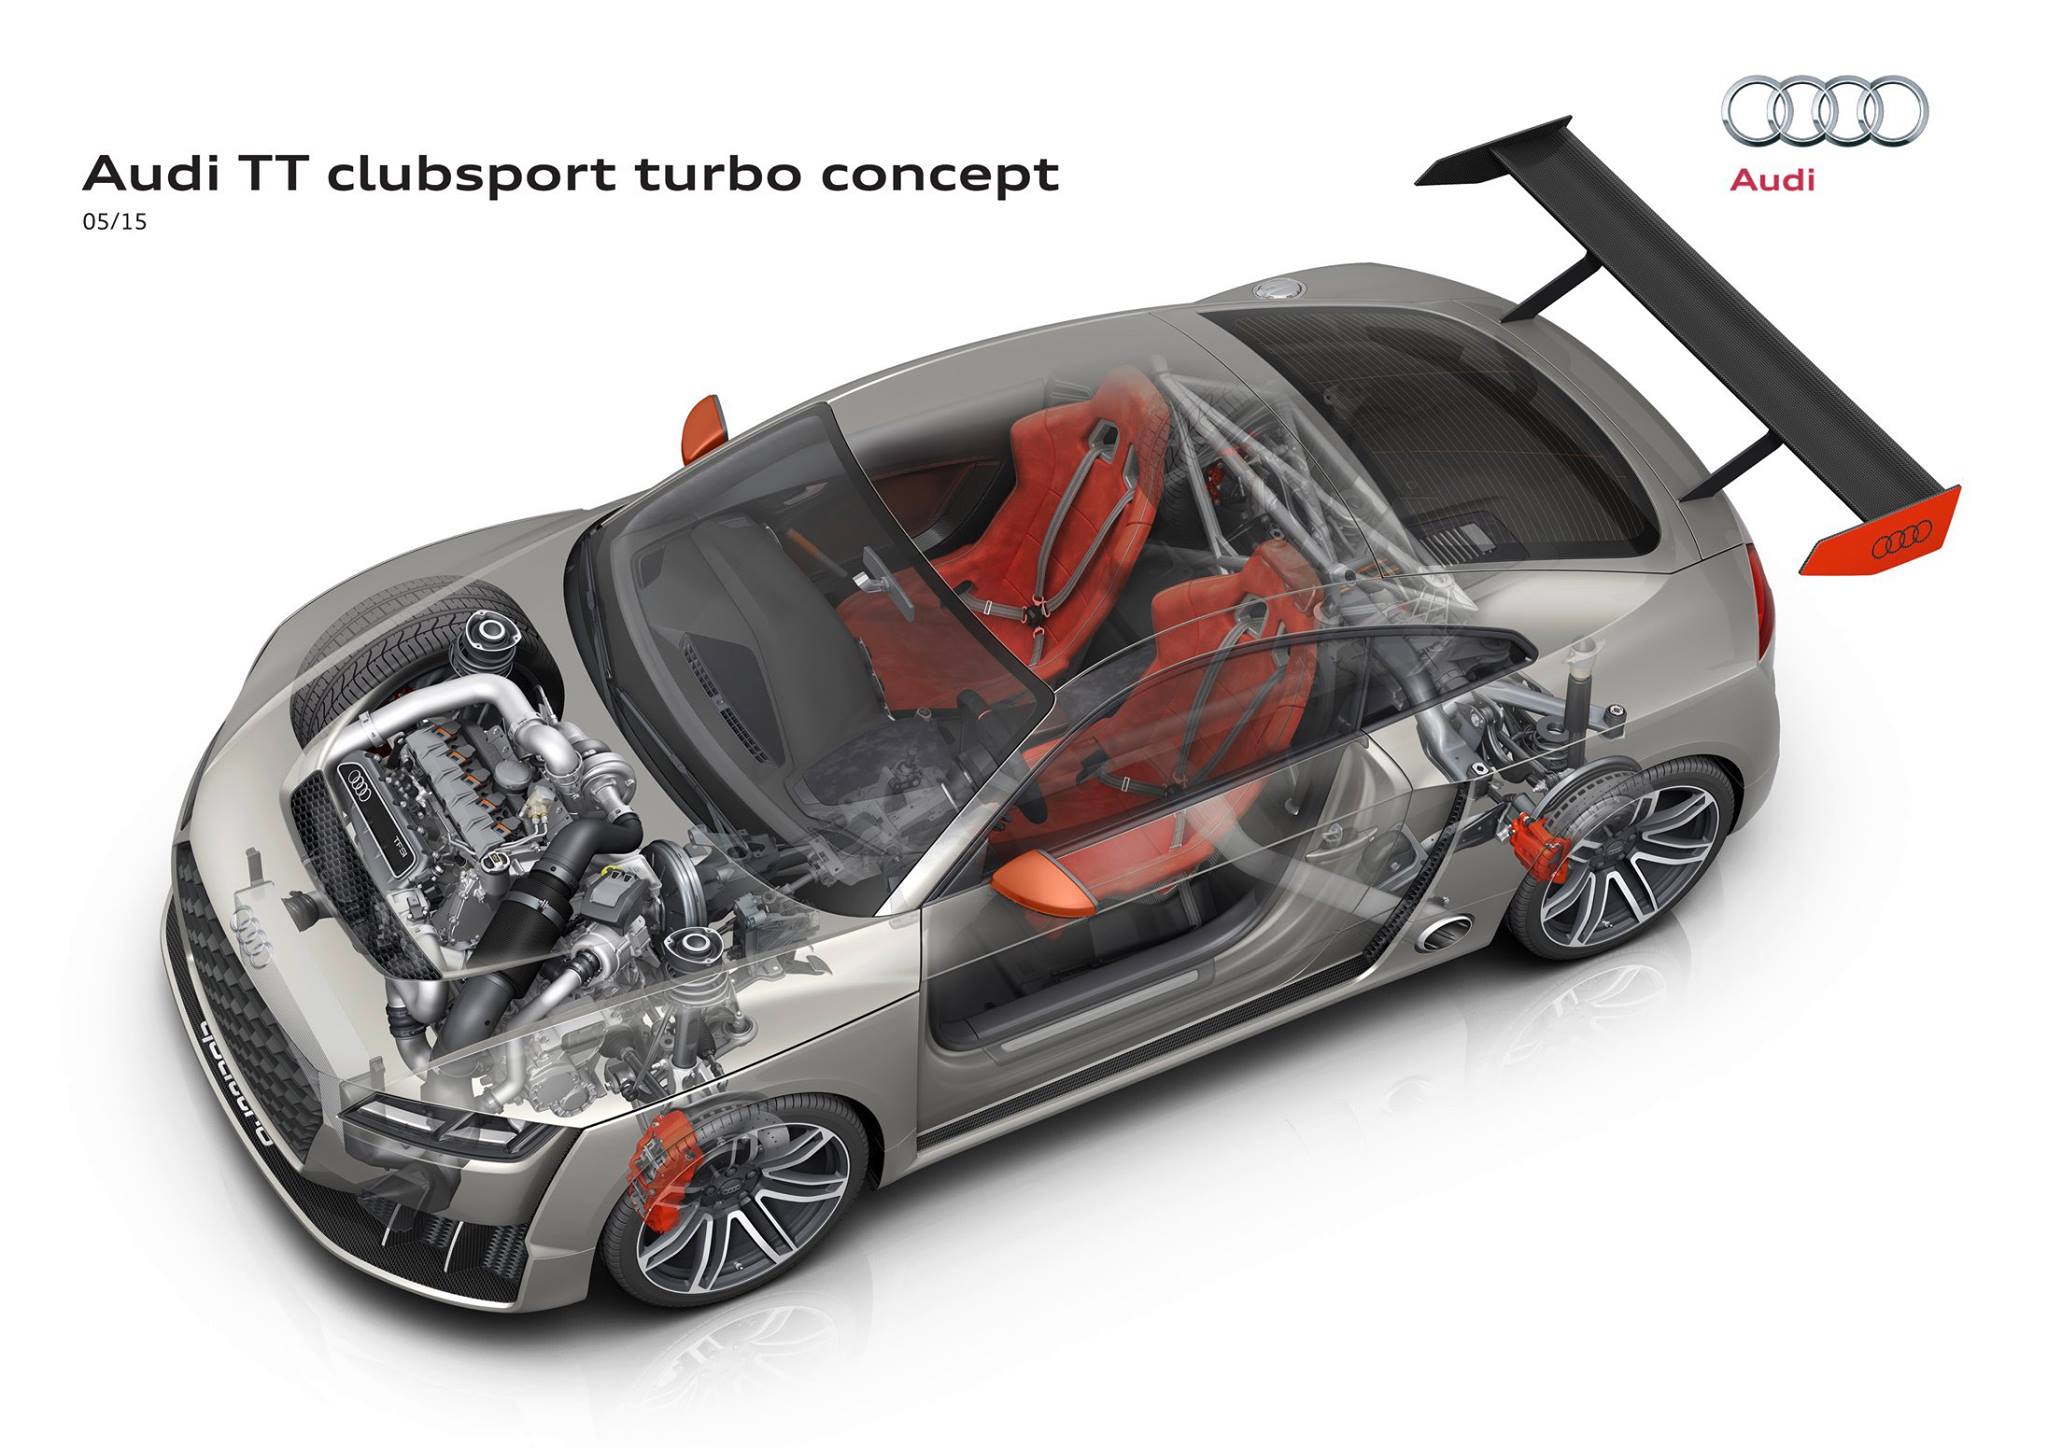 Audi TT clubsport turbo concept - inside powertains